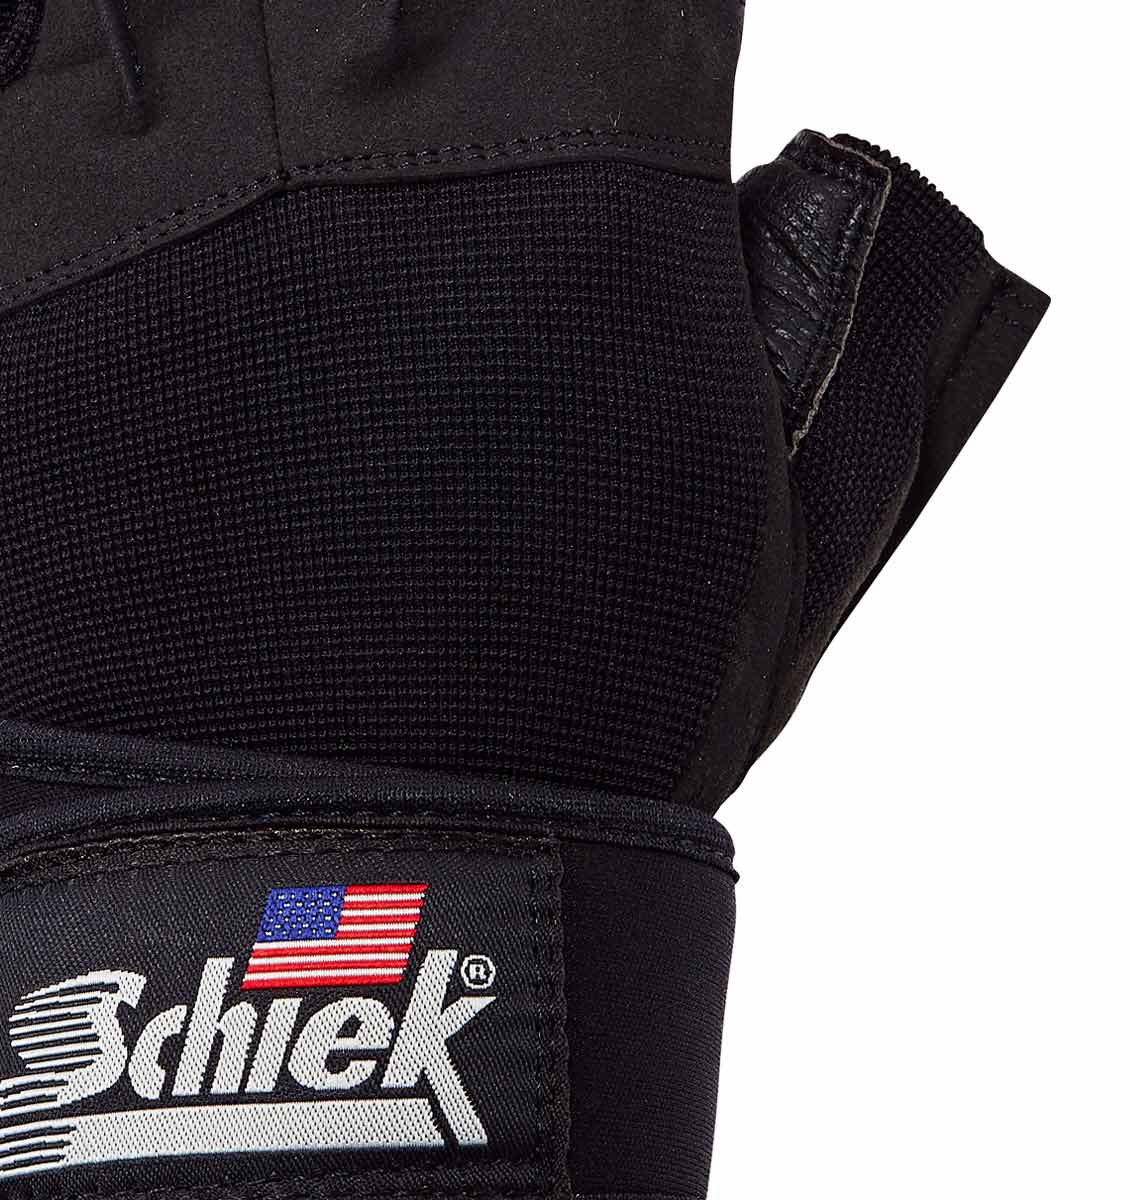 540 Schiek Platinum Series Lifting Gym Gloves with Wrist Wraps Top Close Up